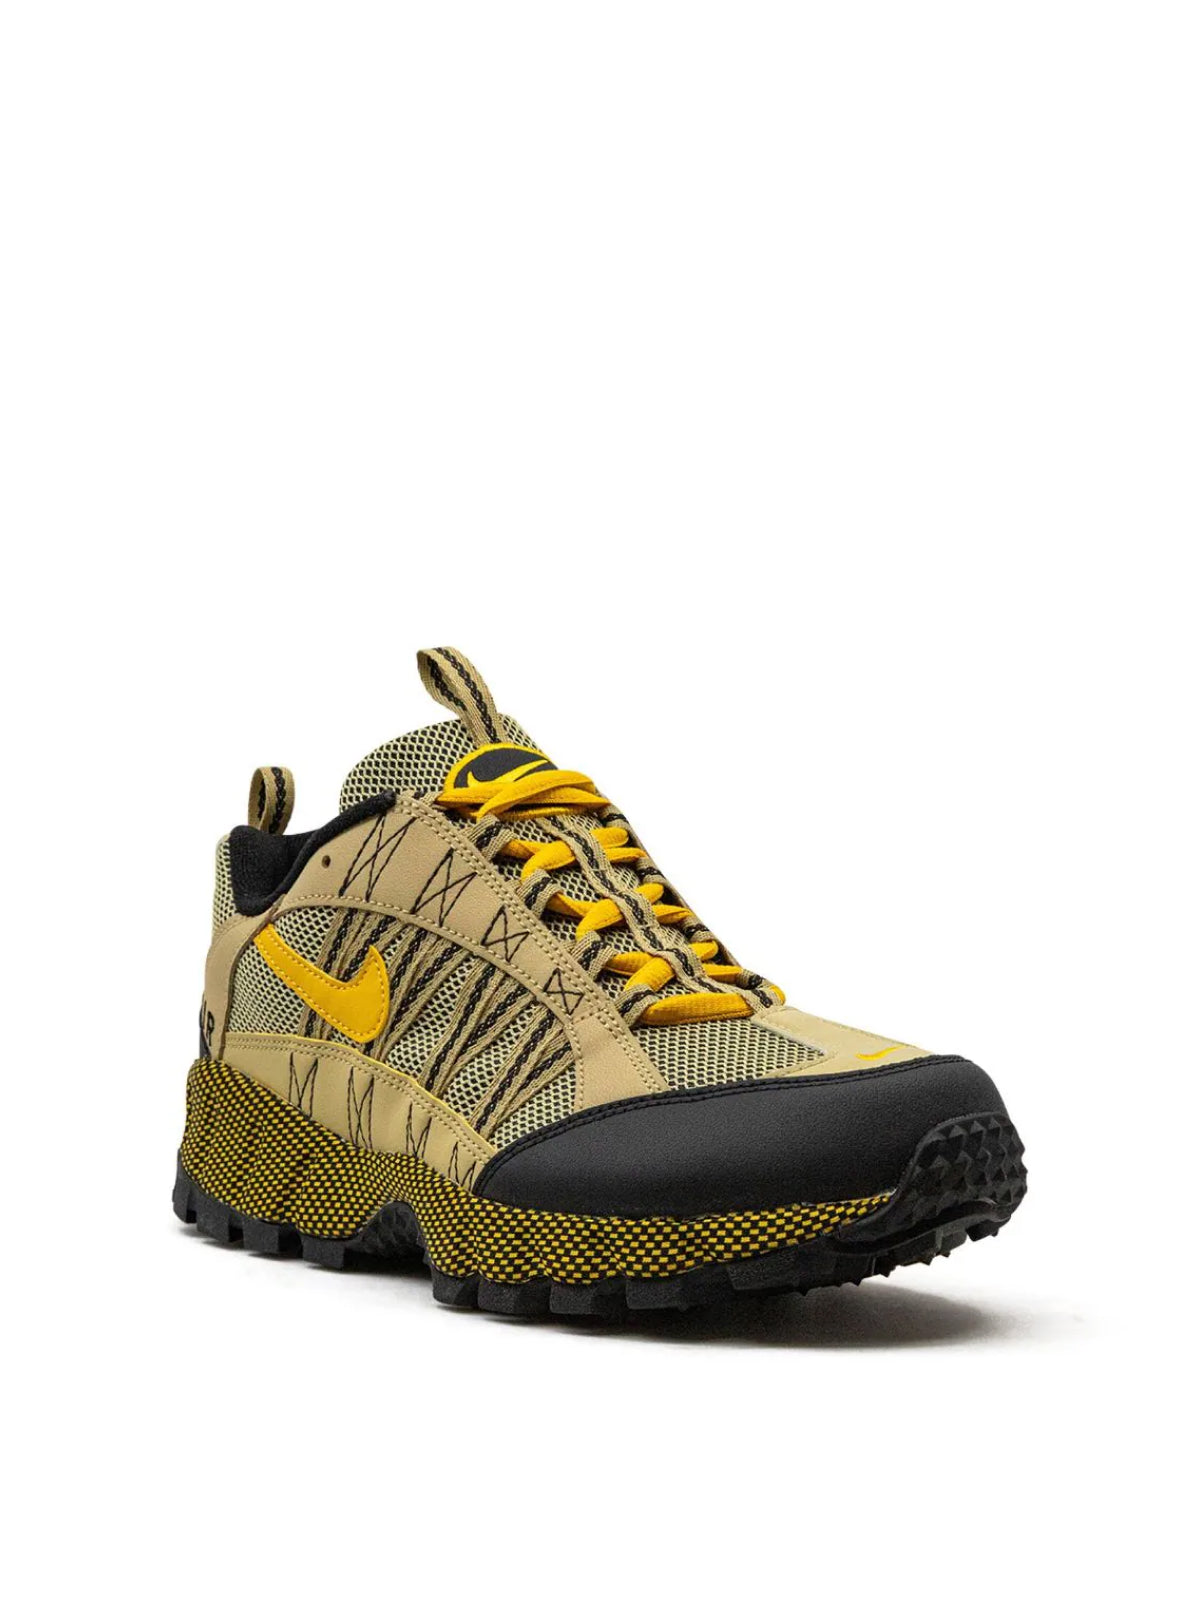 Nike-OUTLET-SALE-Air Humara QS Wheat Grass Sneakers-ARCHIVIST